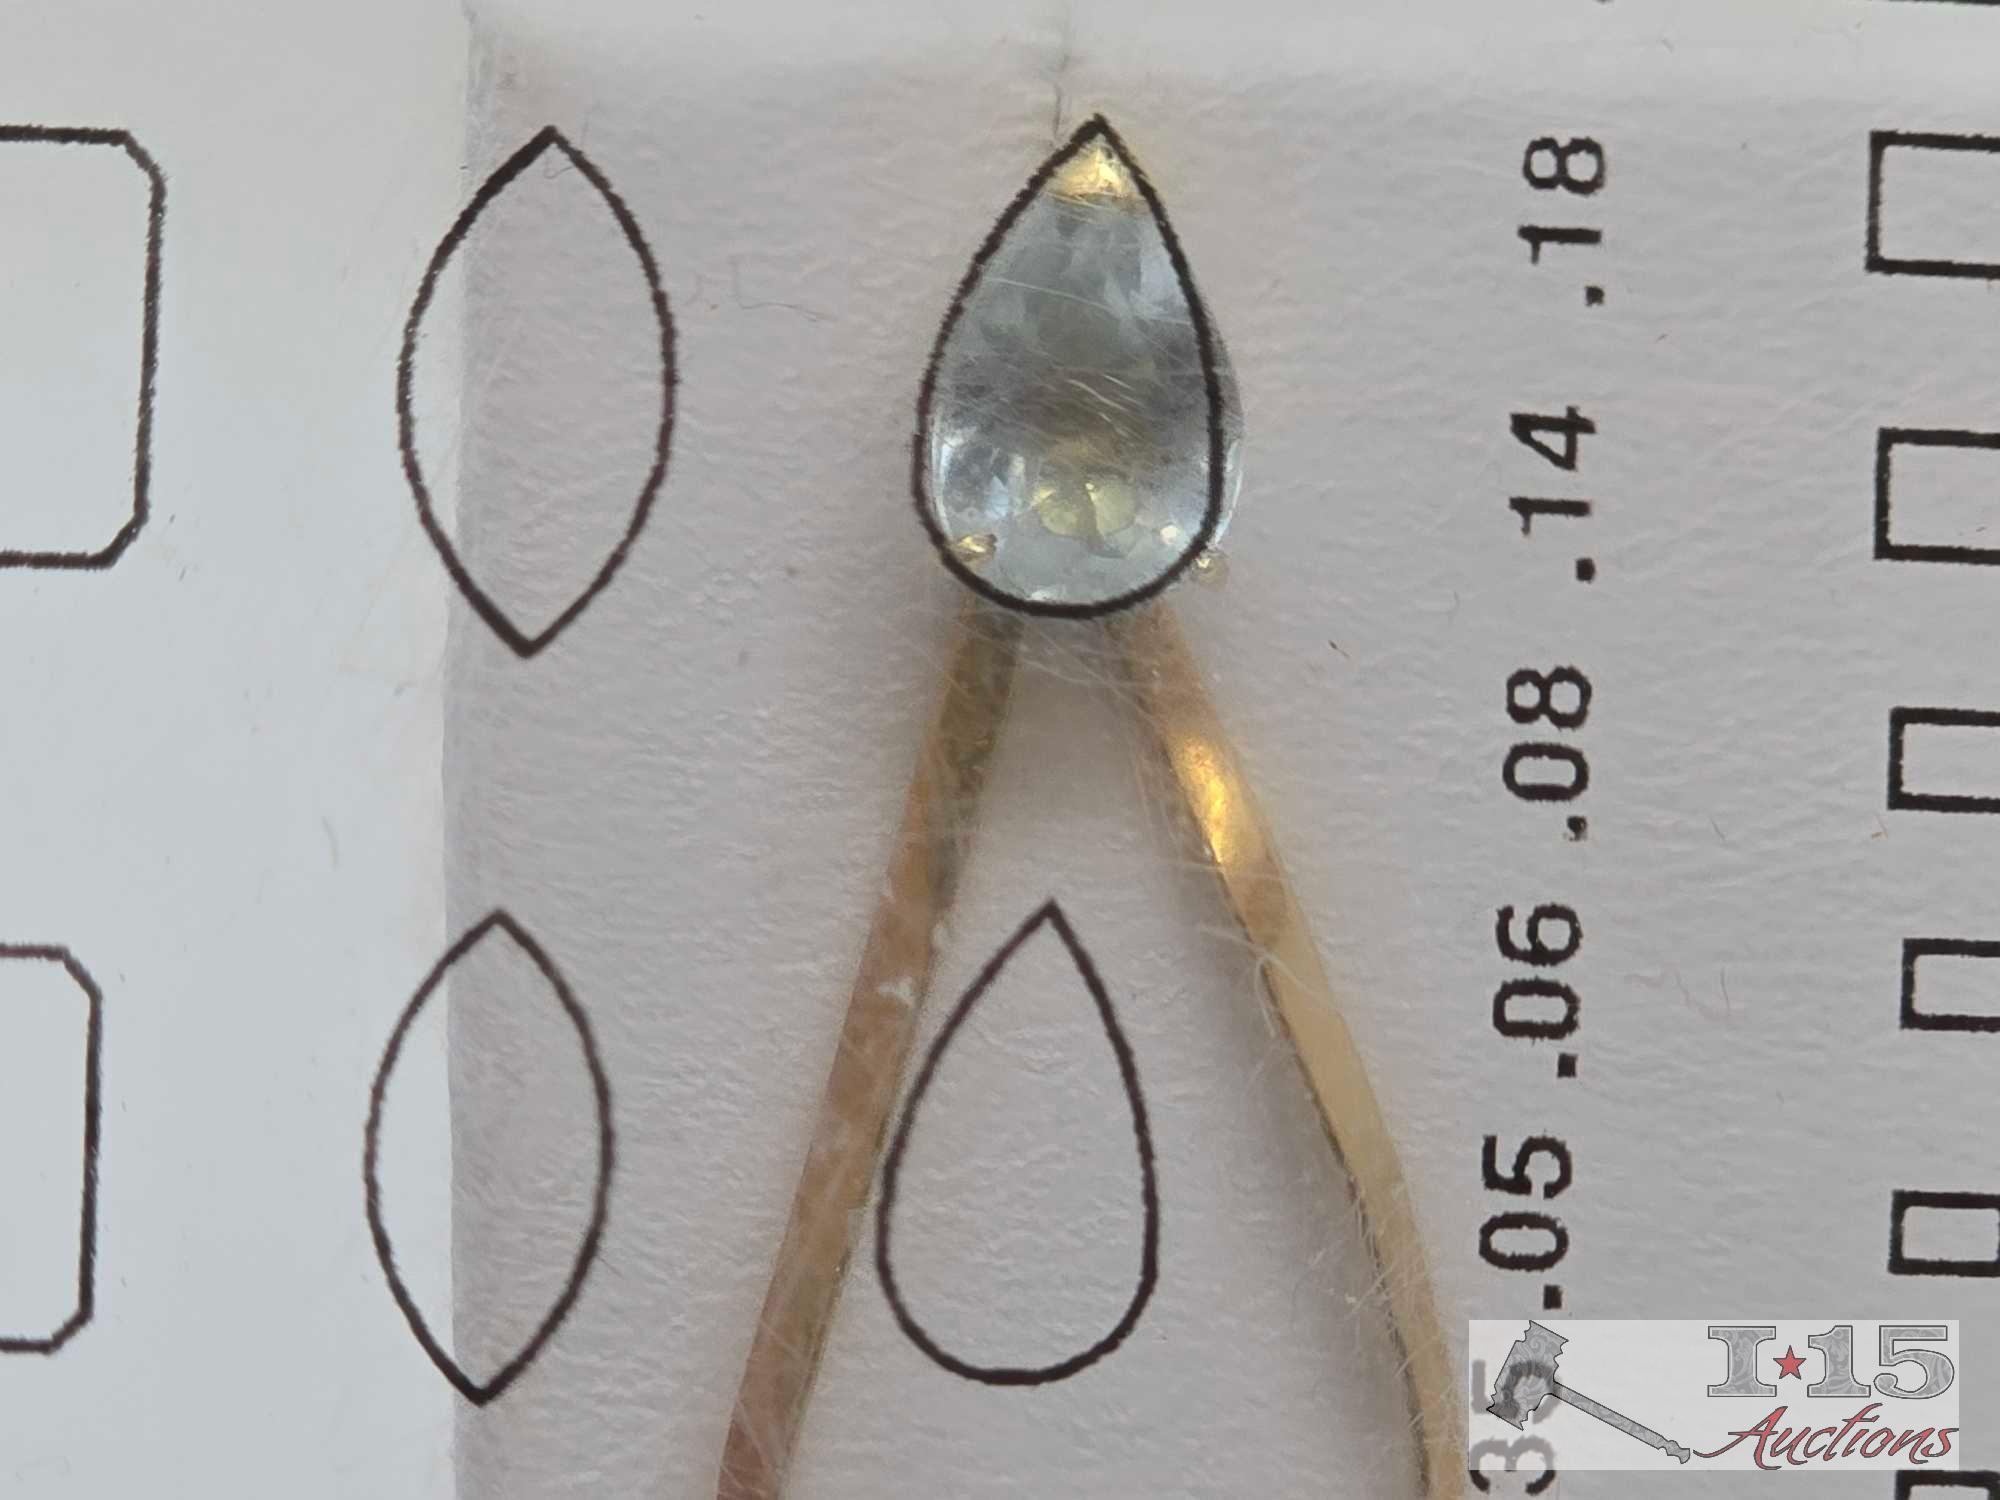 (2) 14K Gold Earrings with Chrysoprase & Aqua Stones, 4g